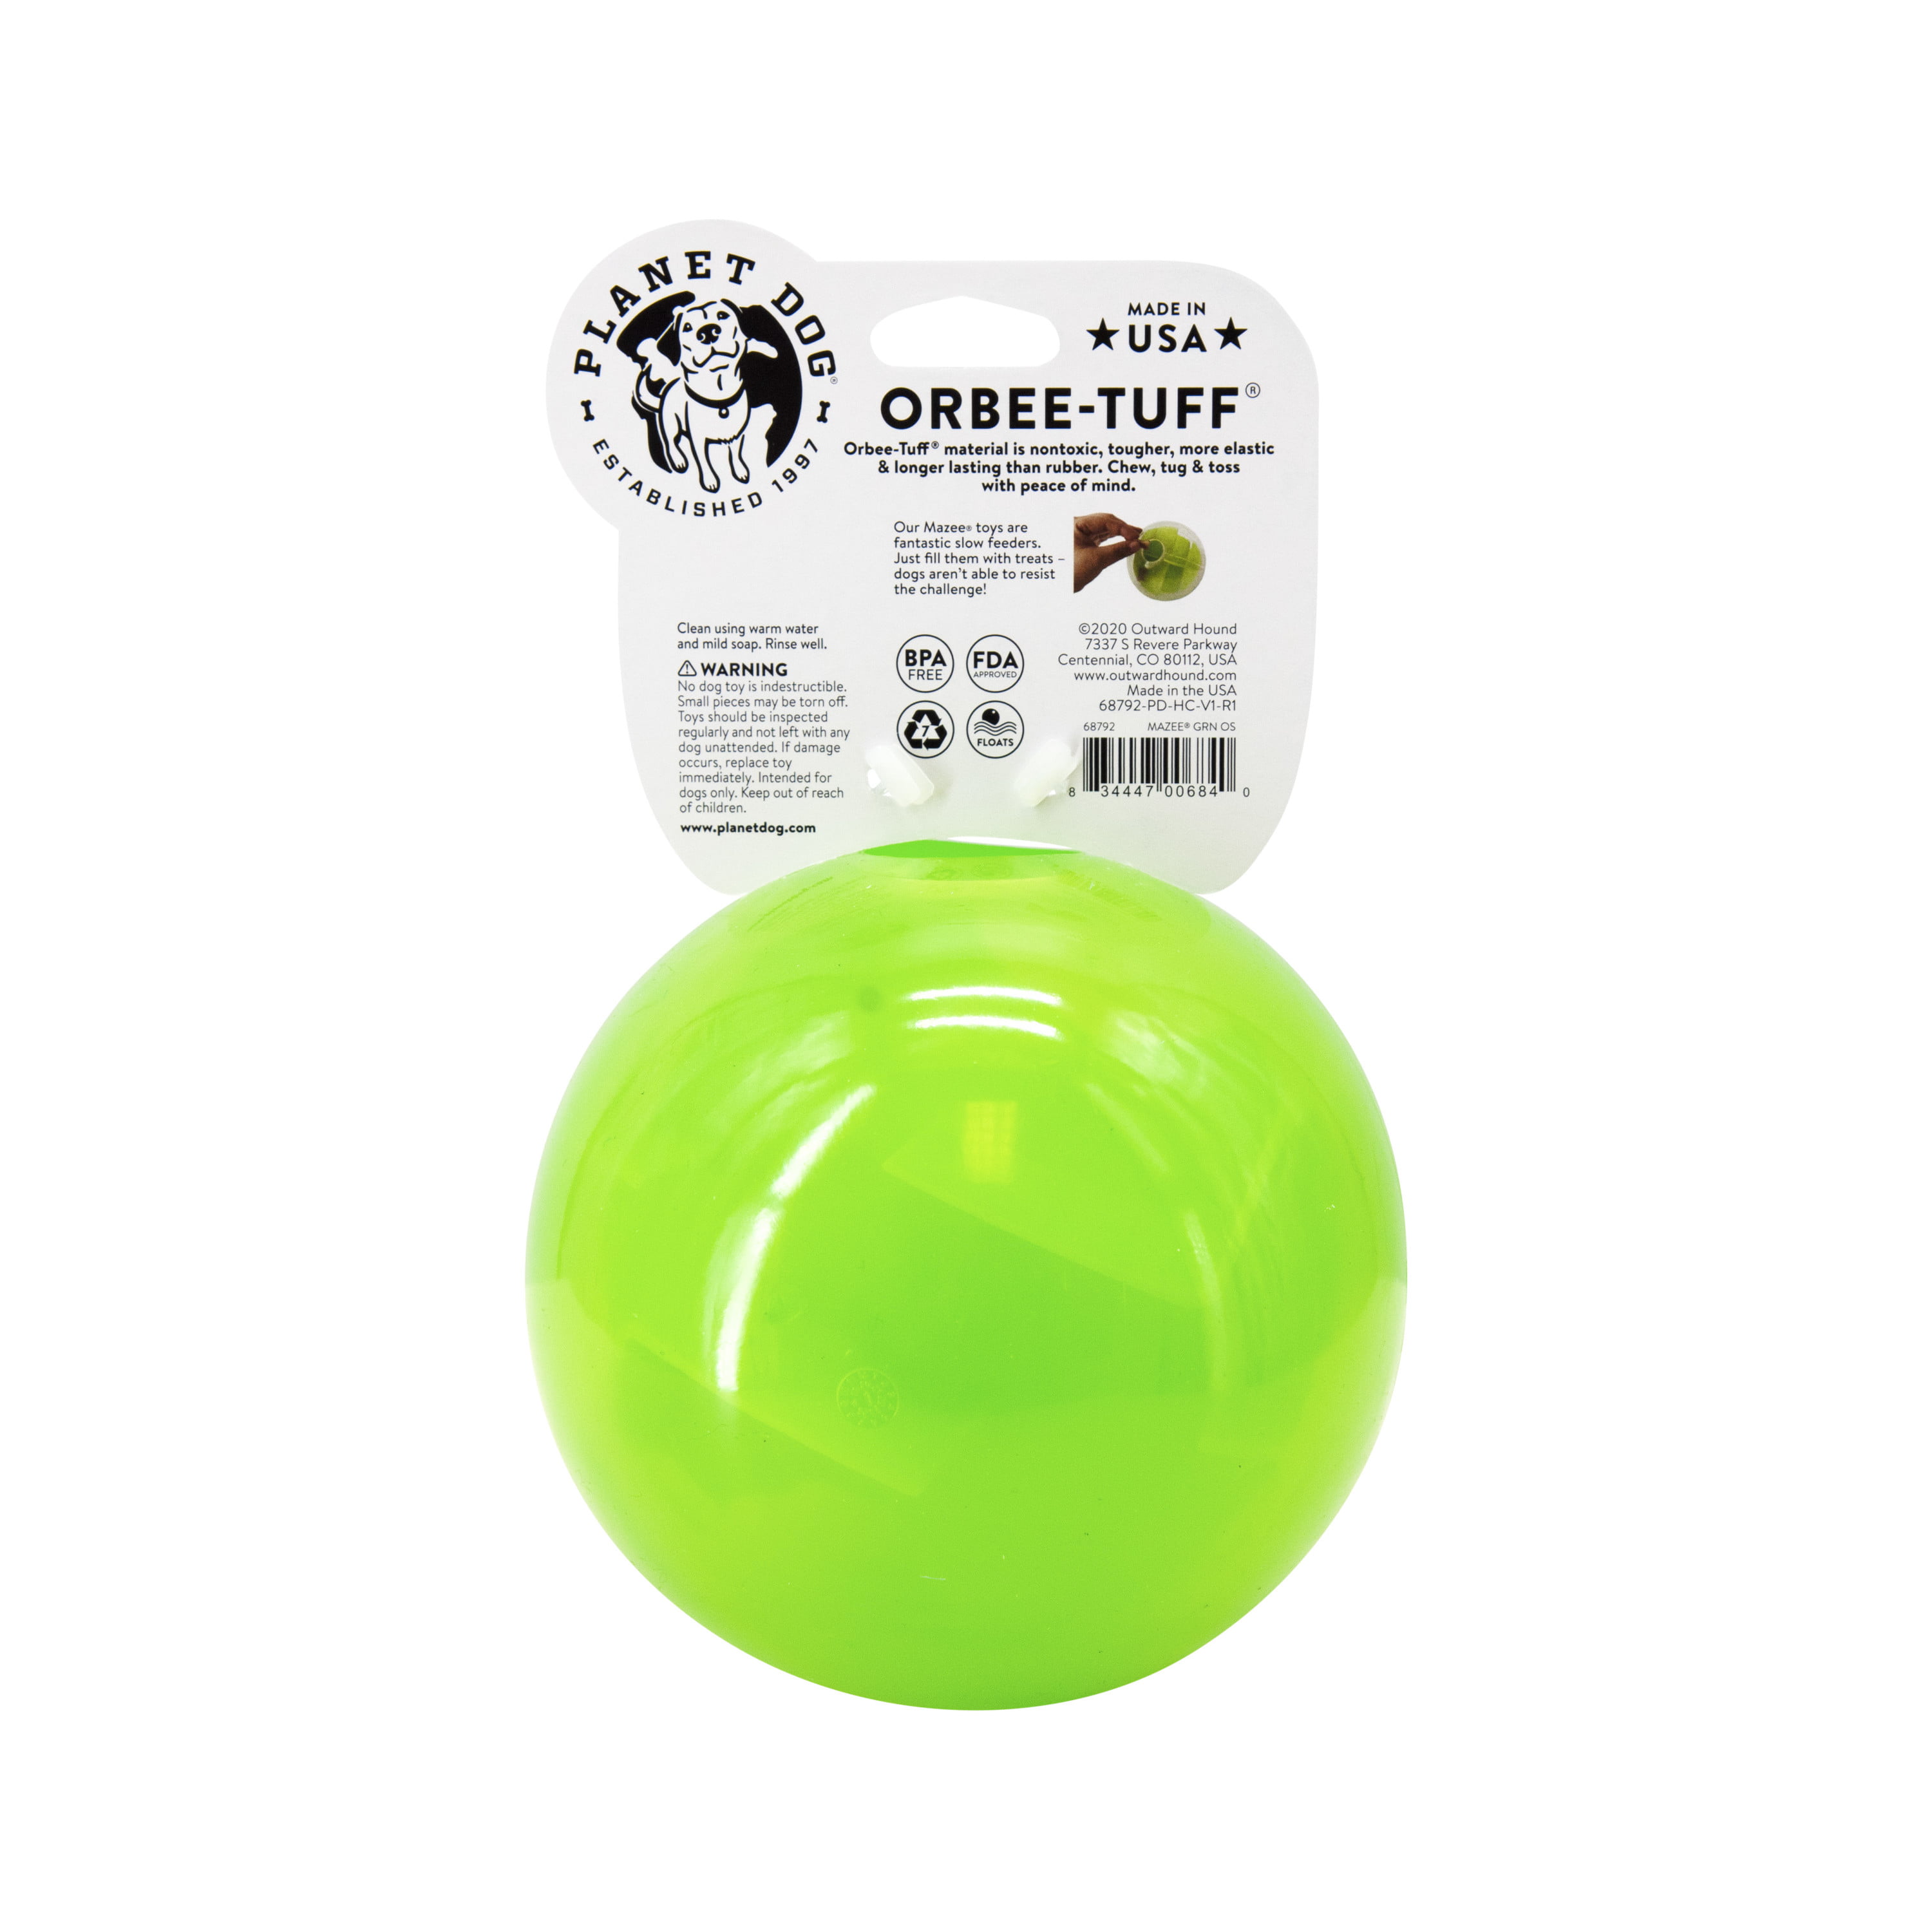 Pet Supplies : Pet Toy Balls : Planet Dog Orbee-Tuff Mazee